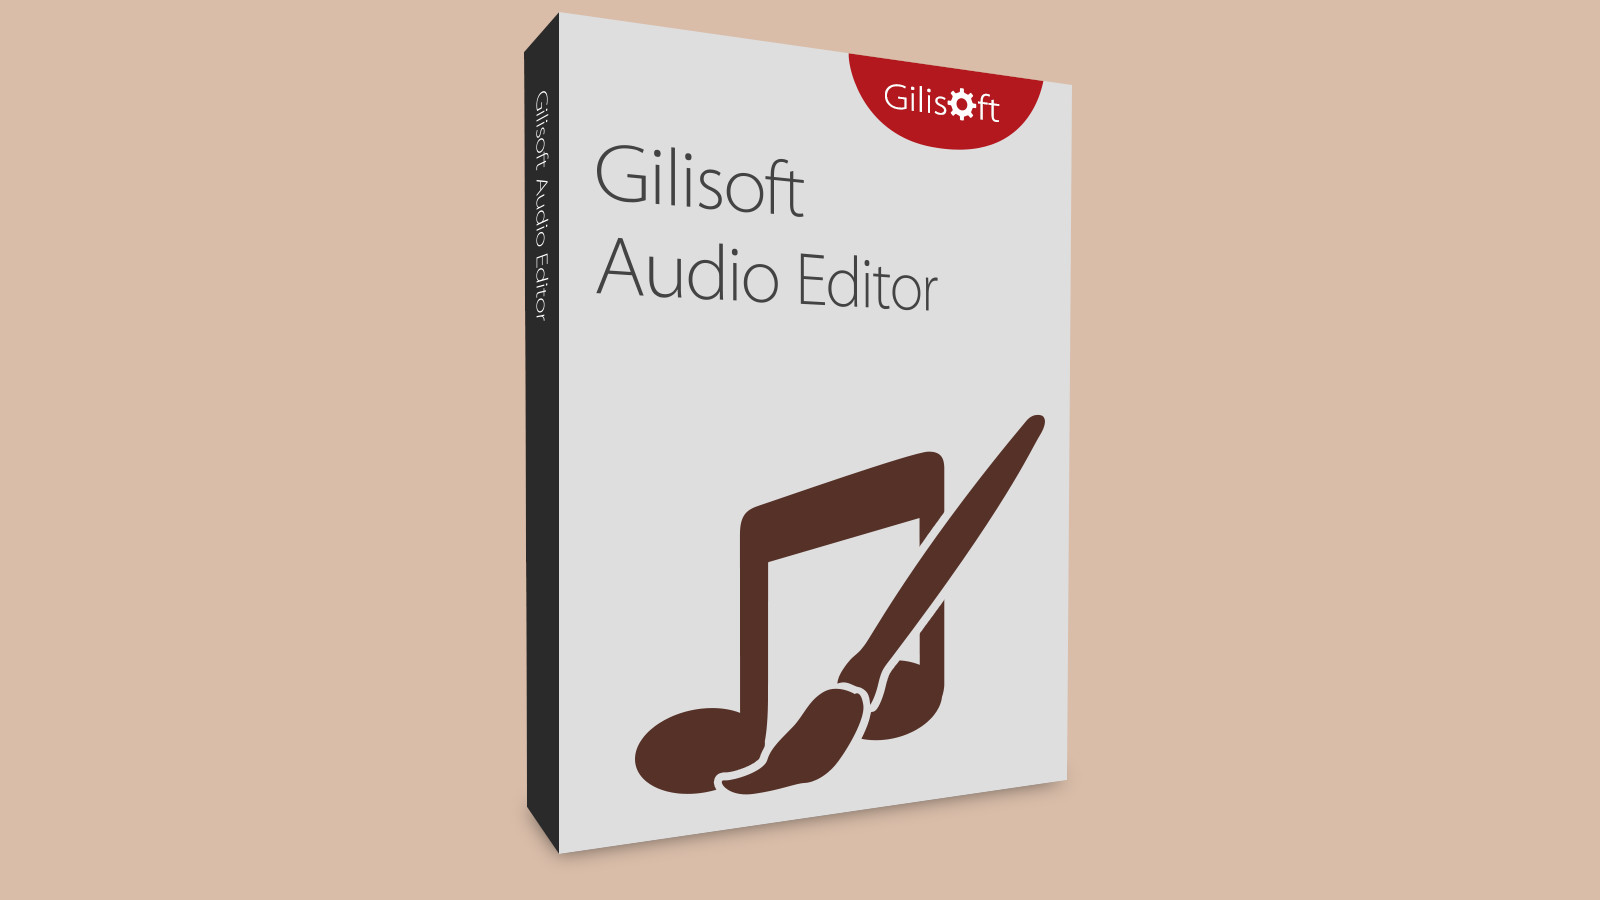 Gilisoft Audio Editor CD Key 16.5$